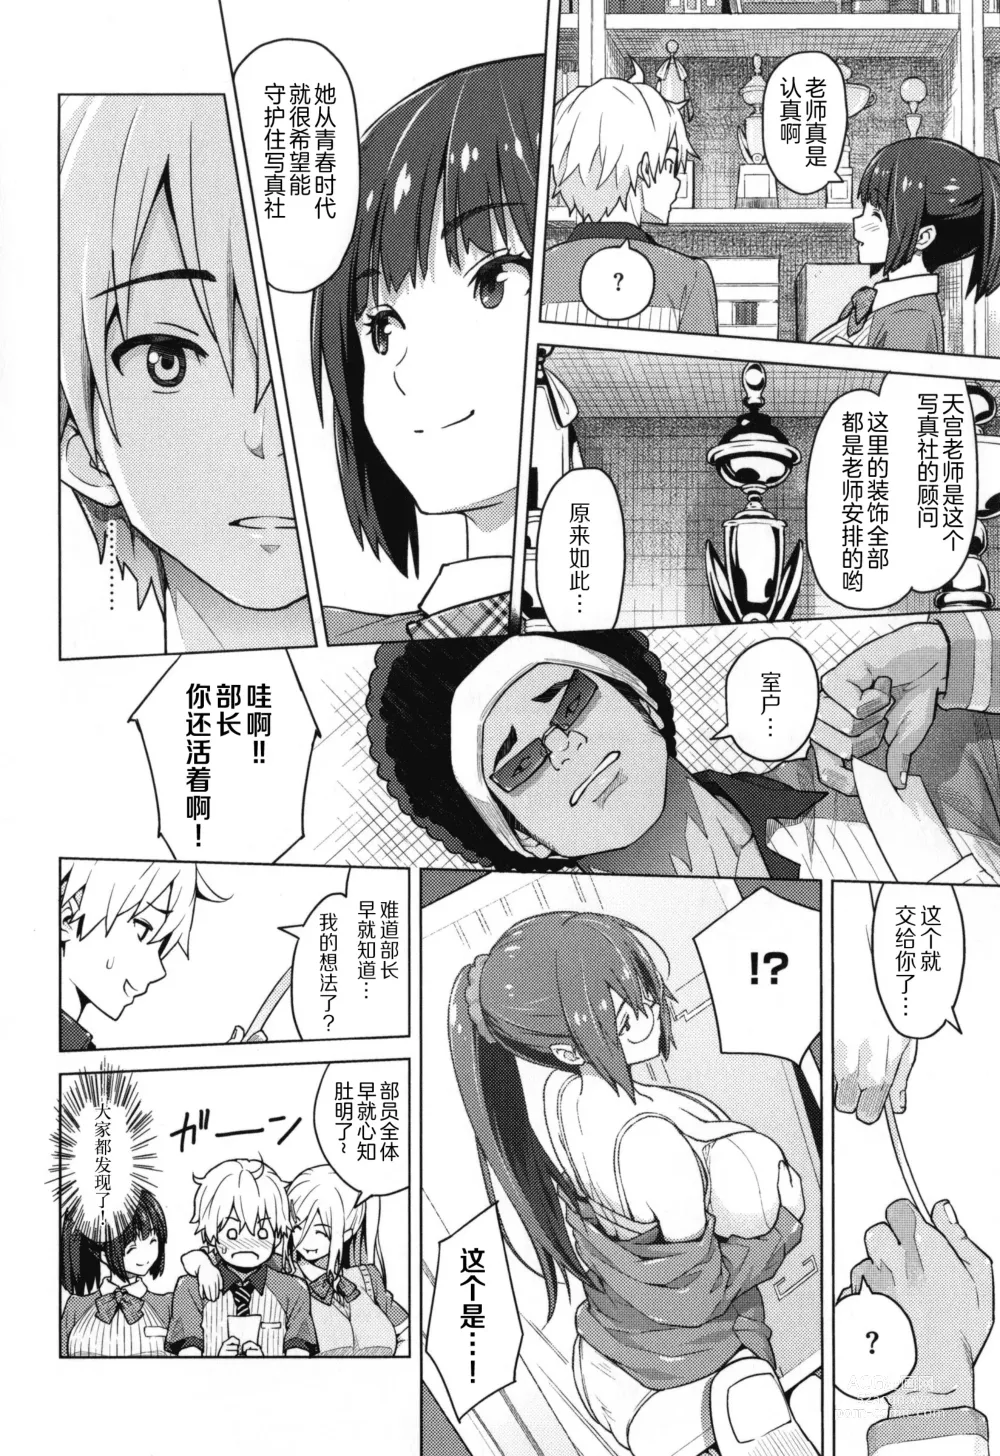 Page 13 of manga Photorare SEX & photograph